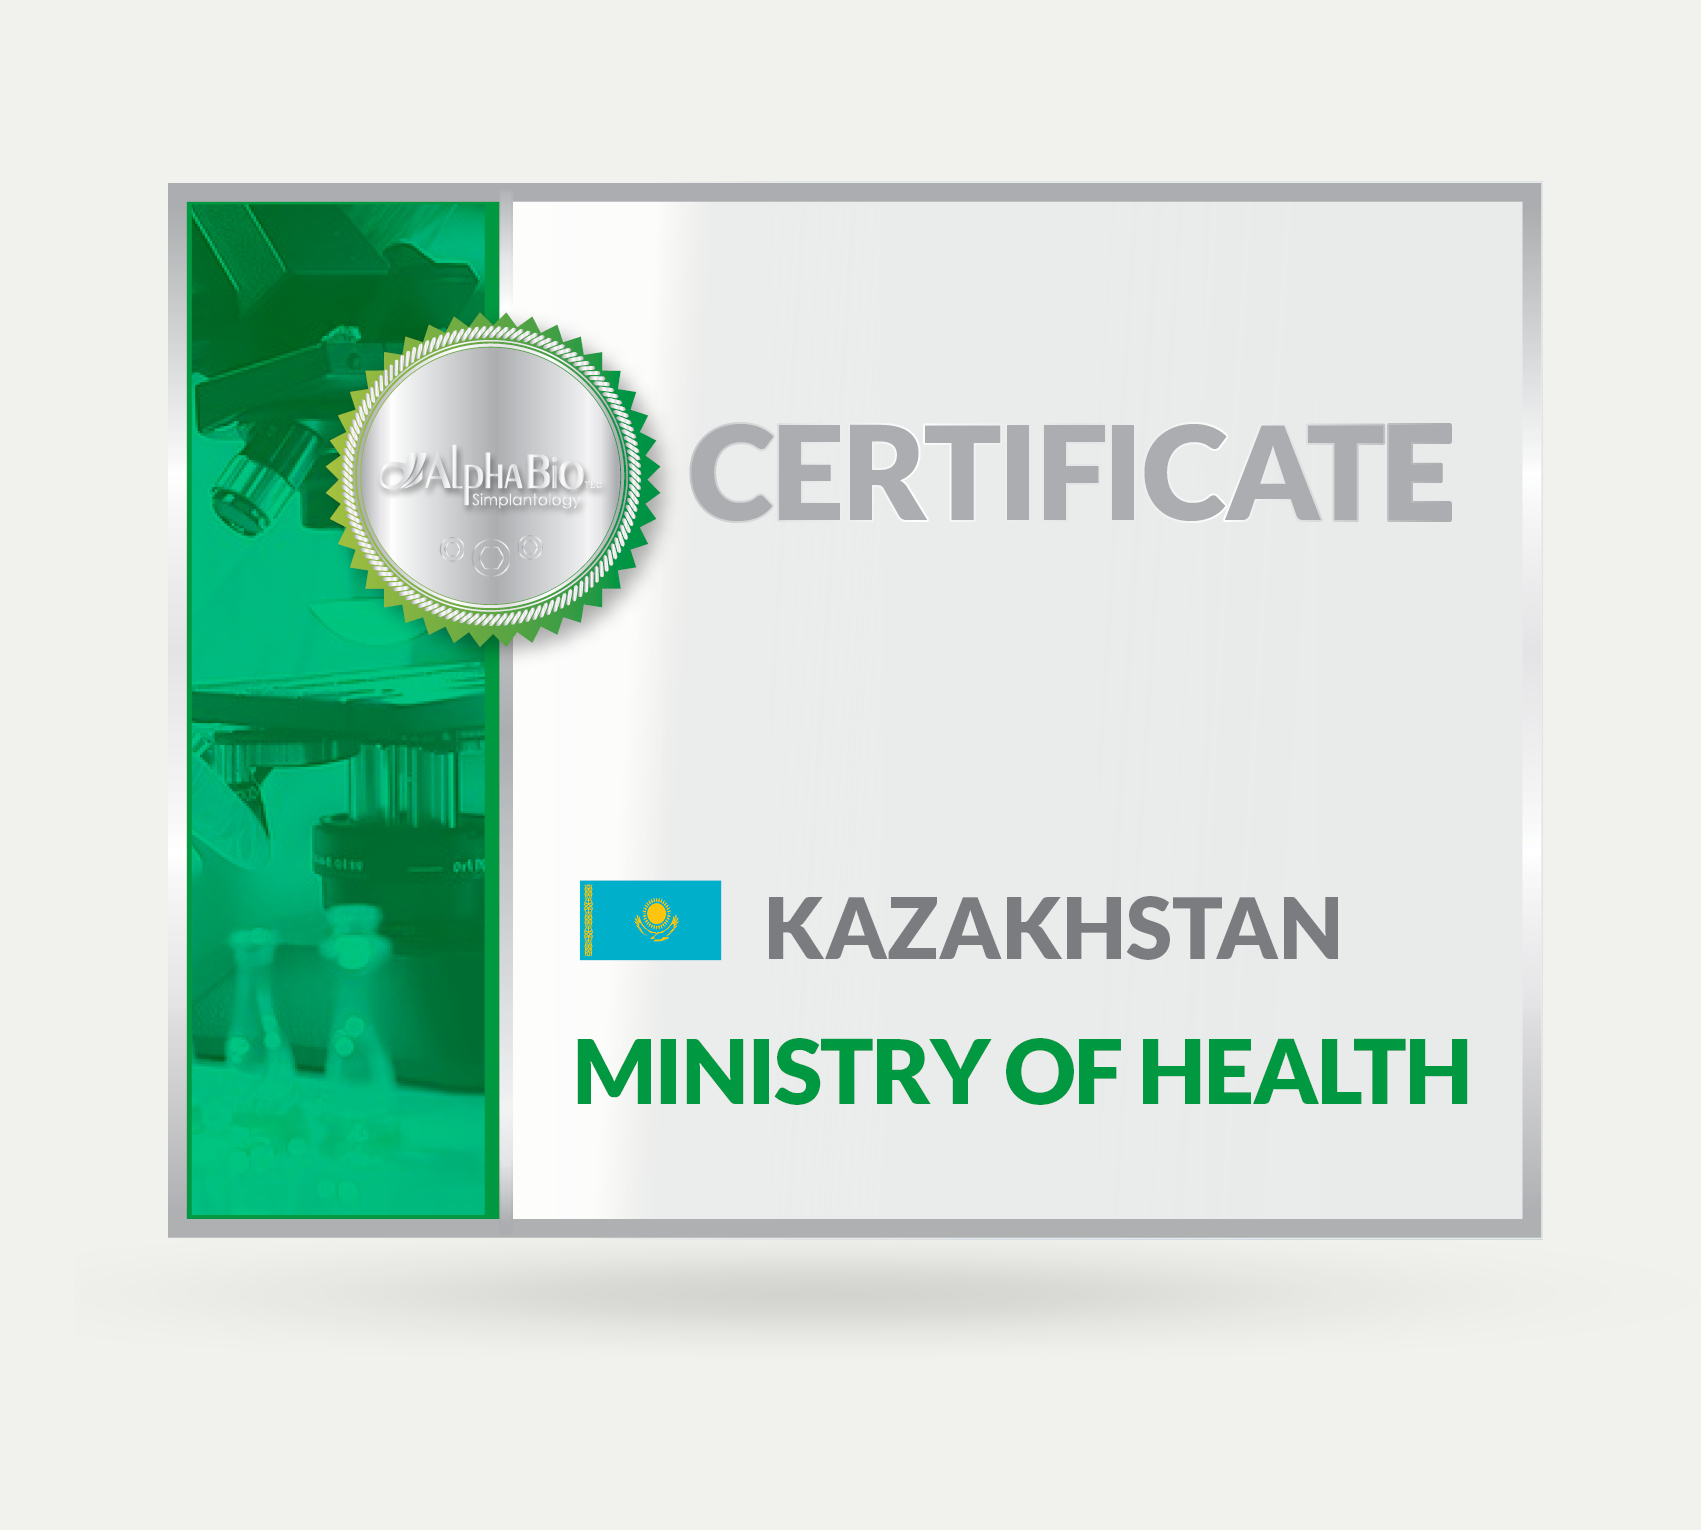 Certificate_Kazakhstan - Alpha Bio Tec